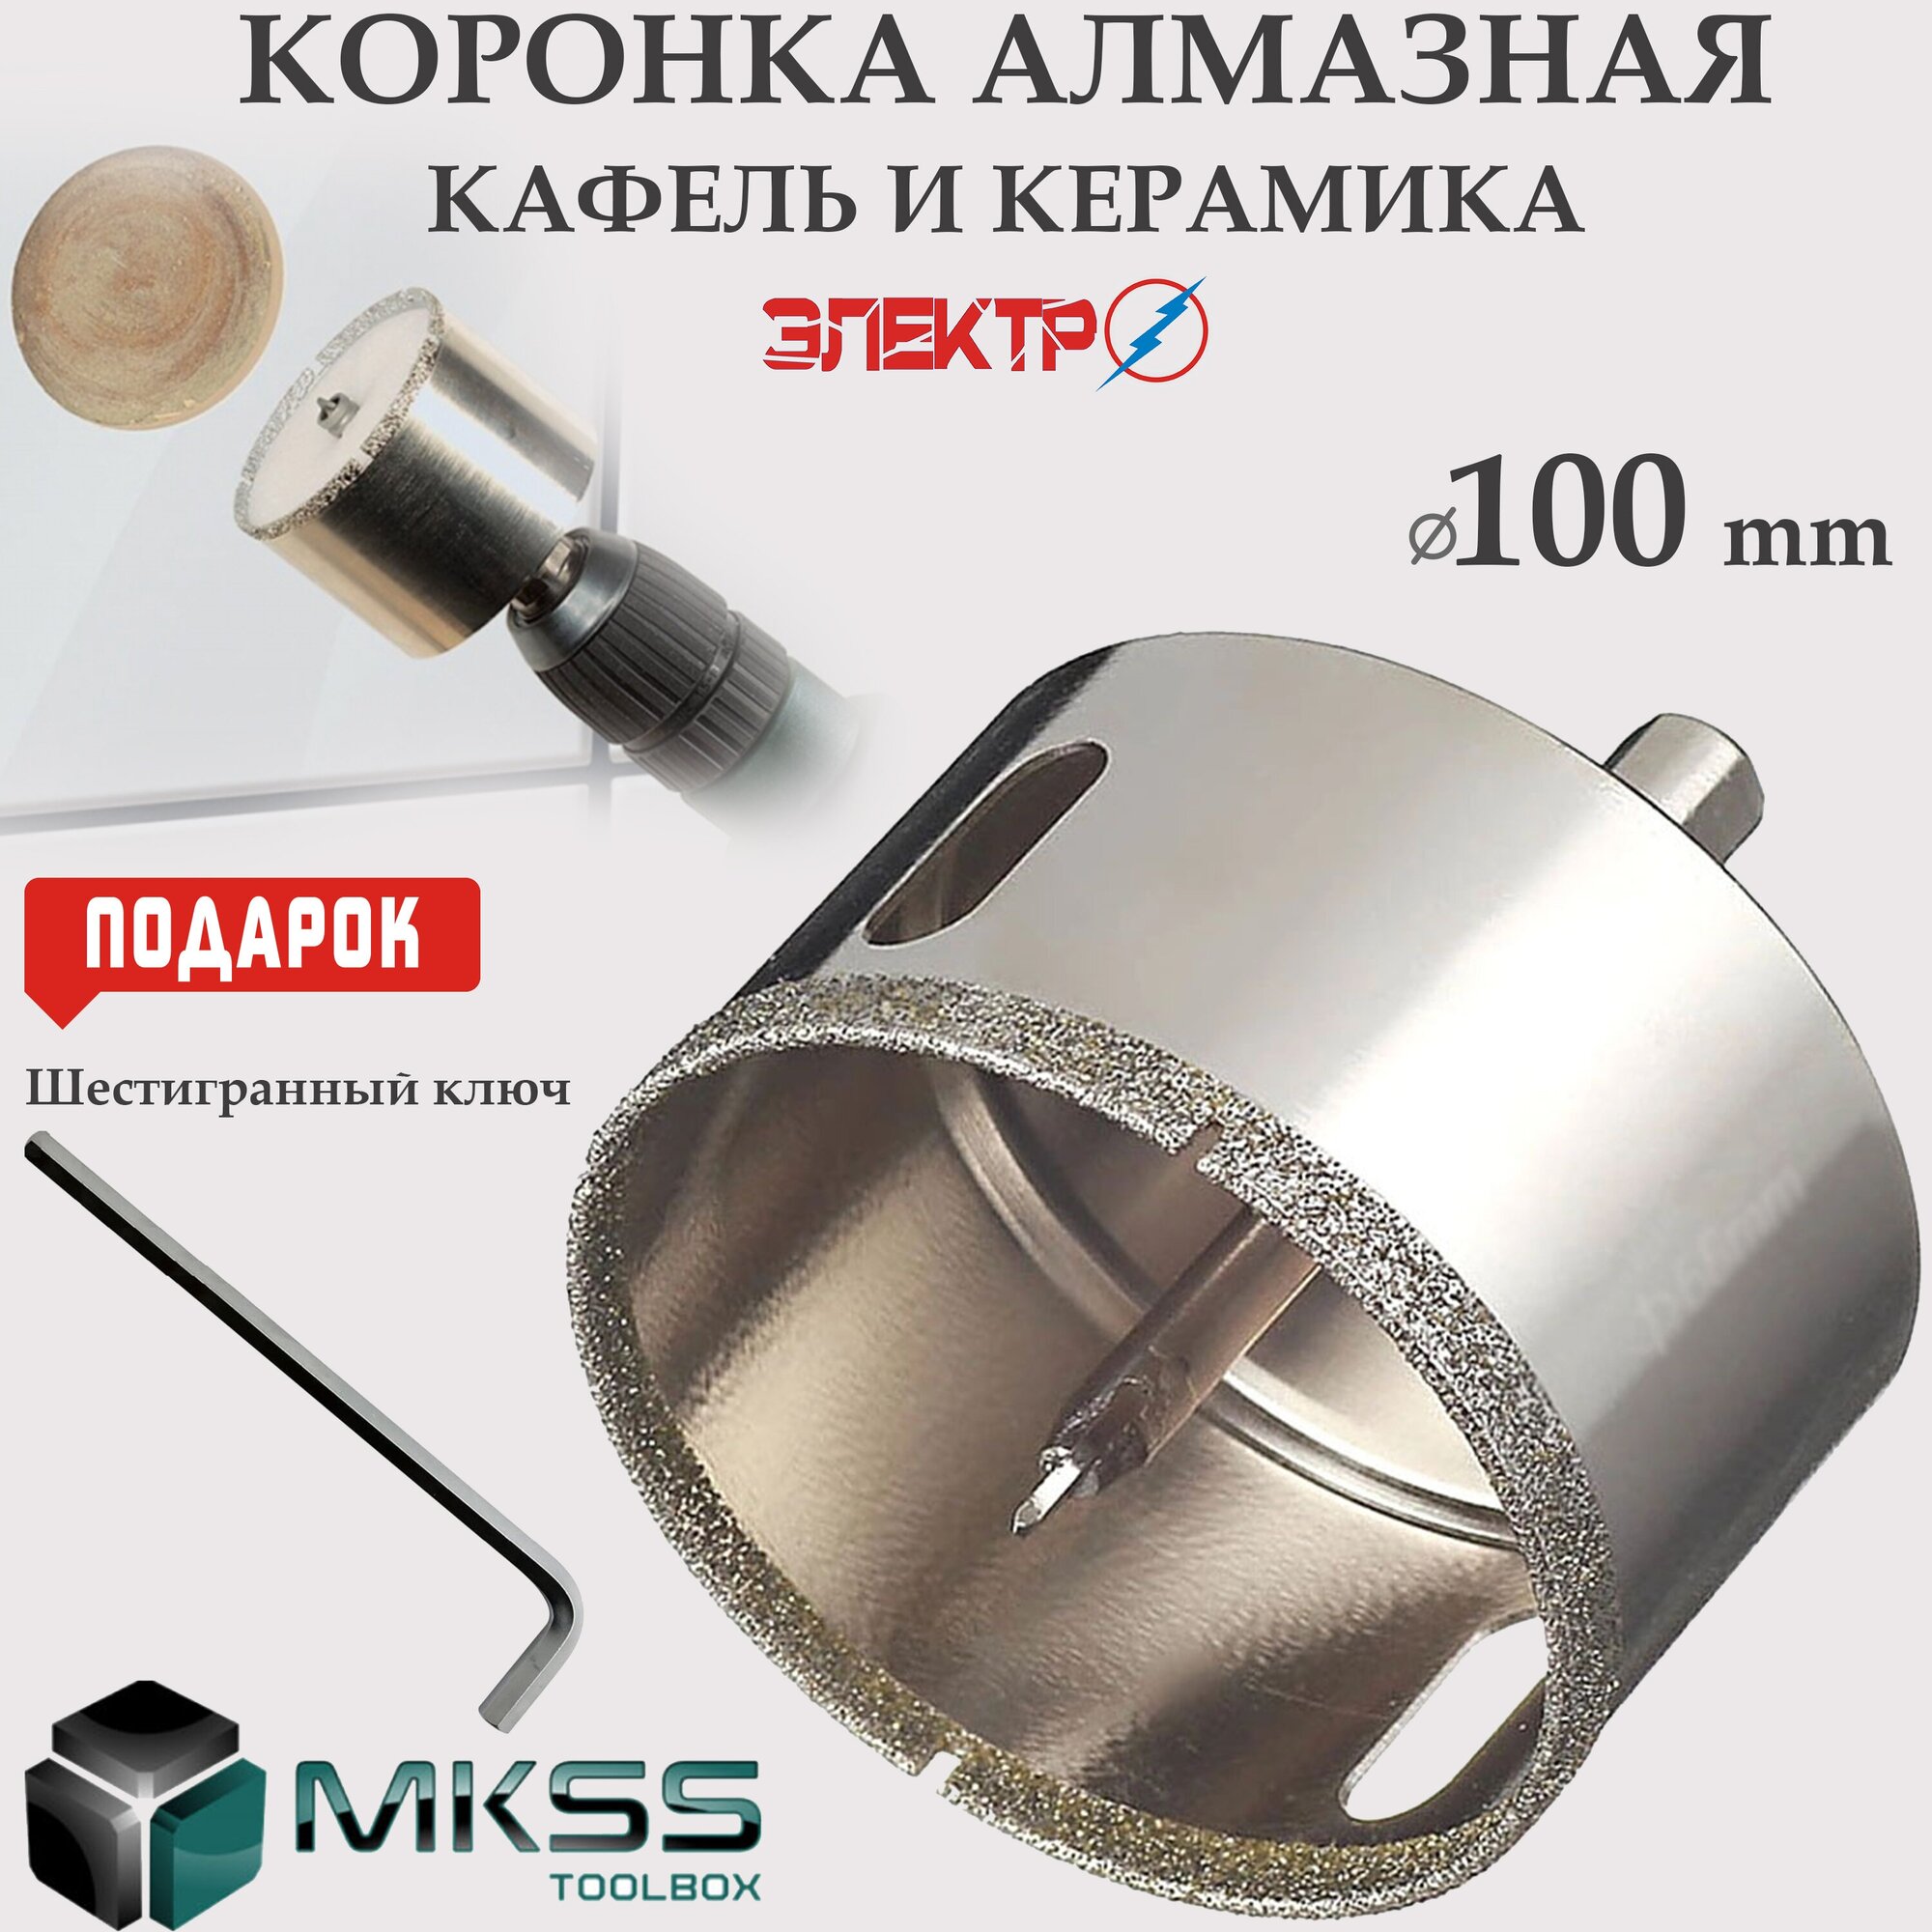 Алмазная коронка по кафелю и керамике 100mm KS-100